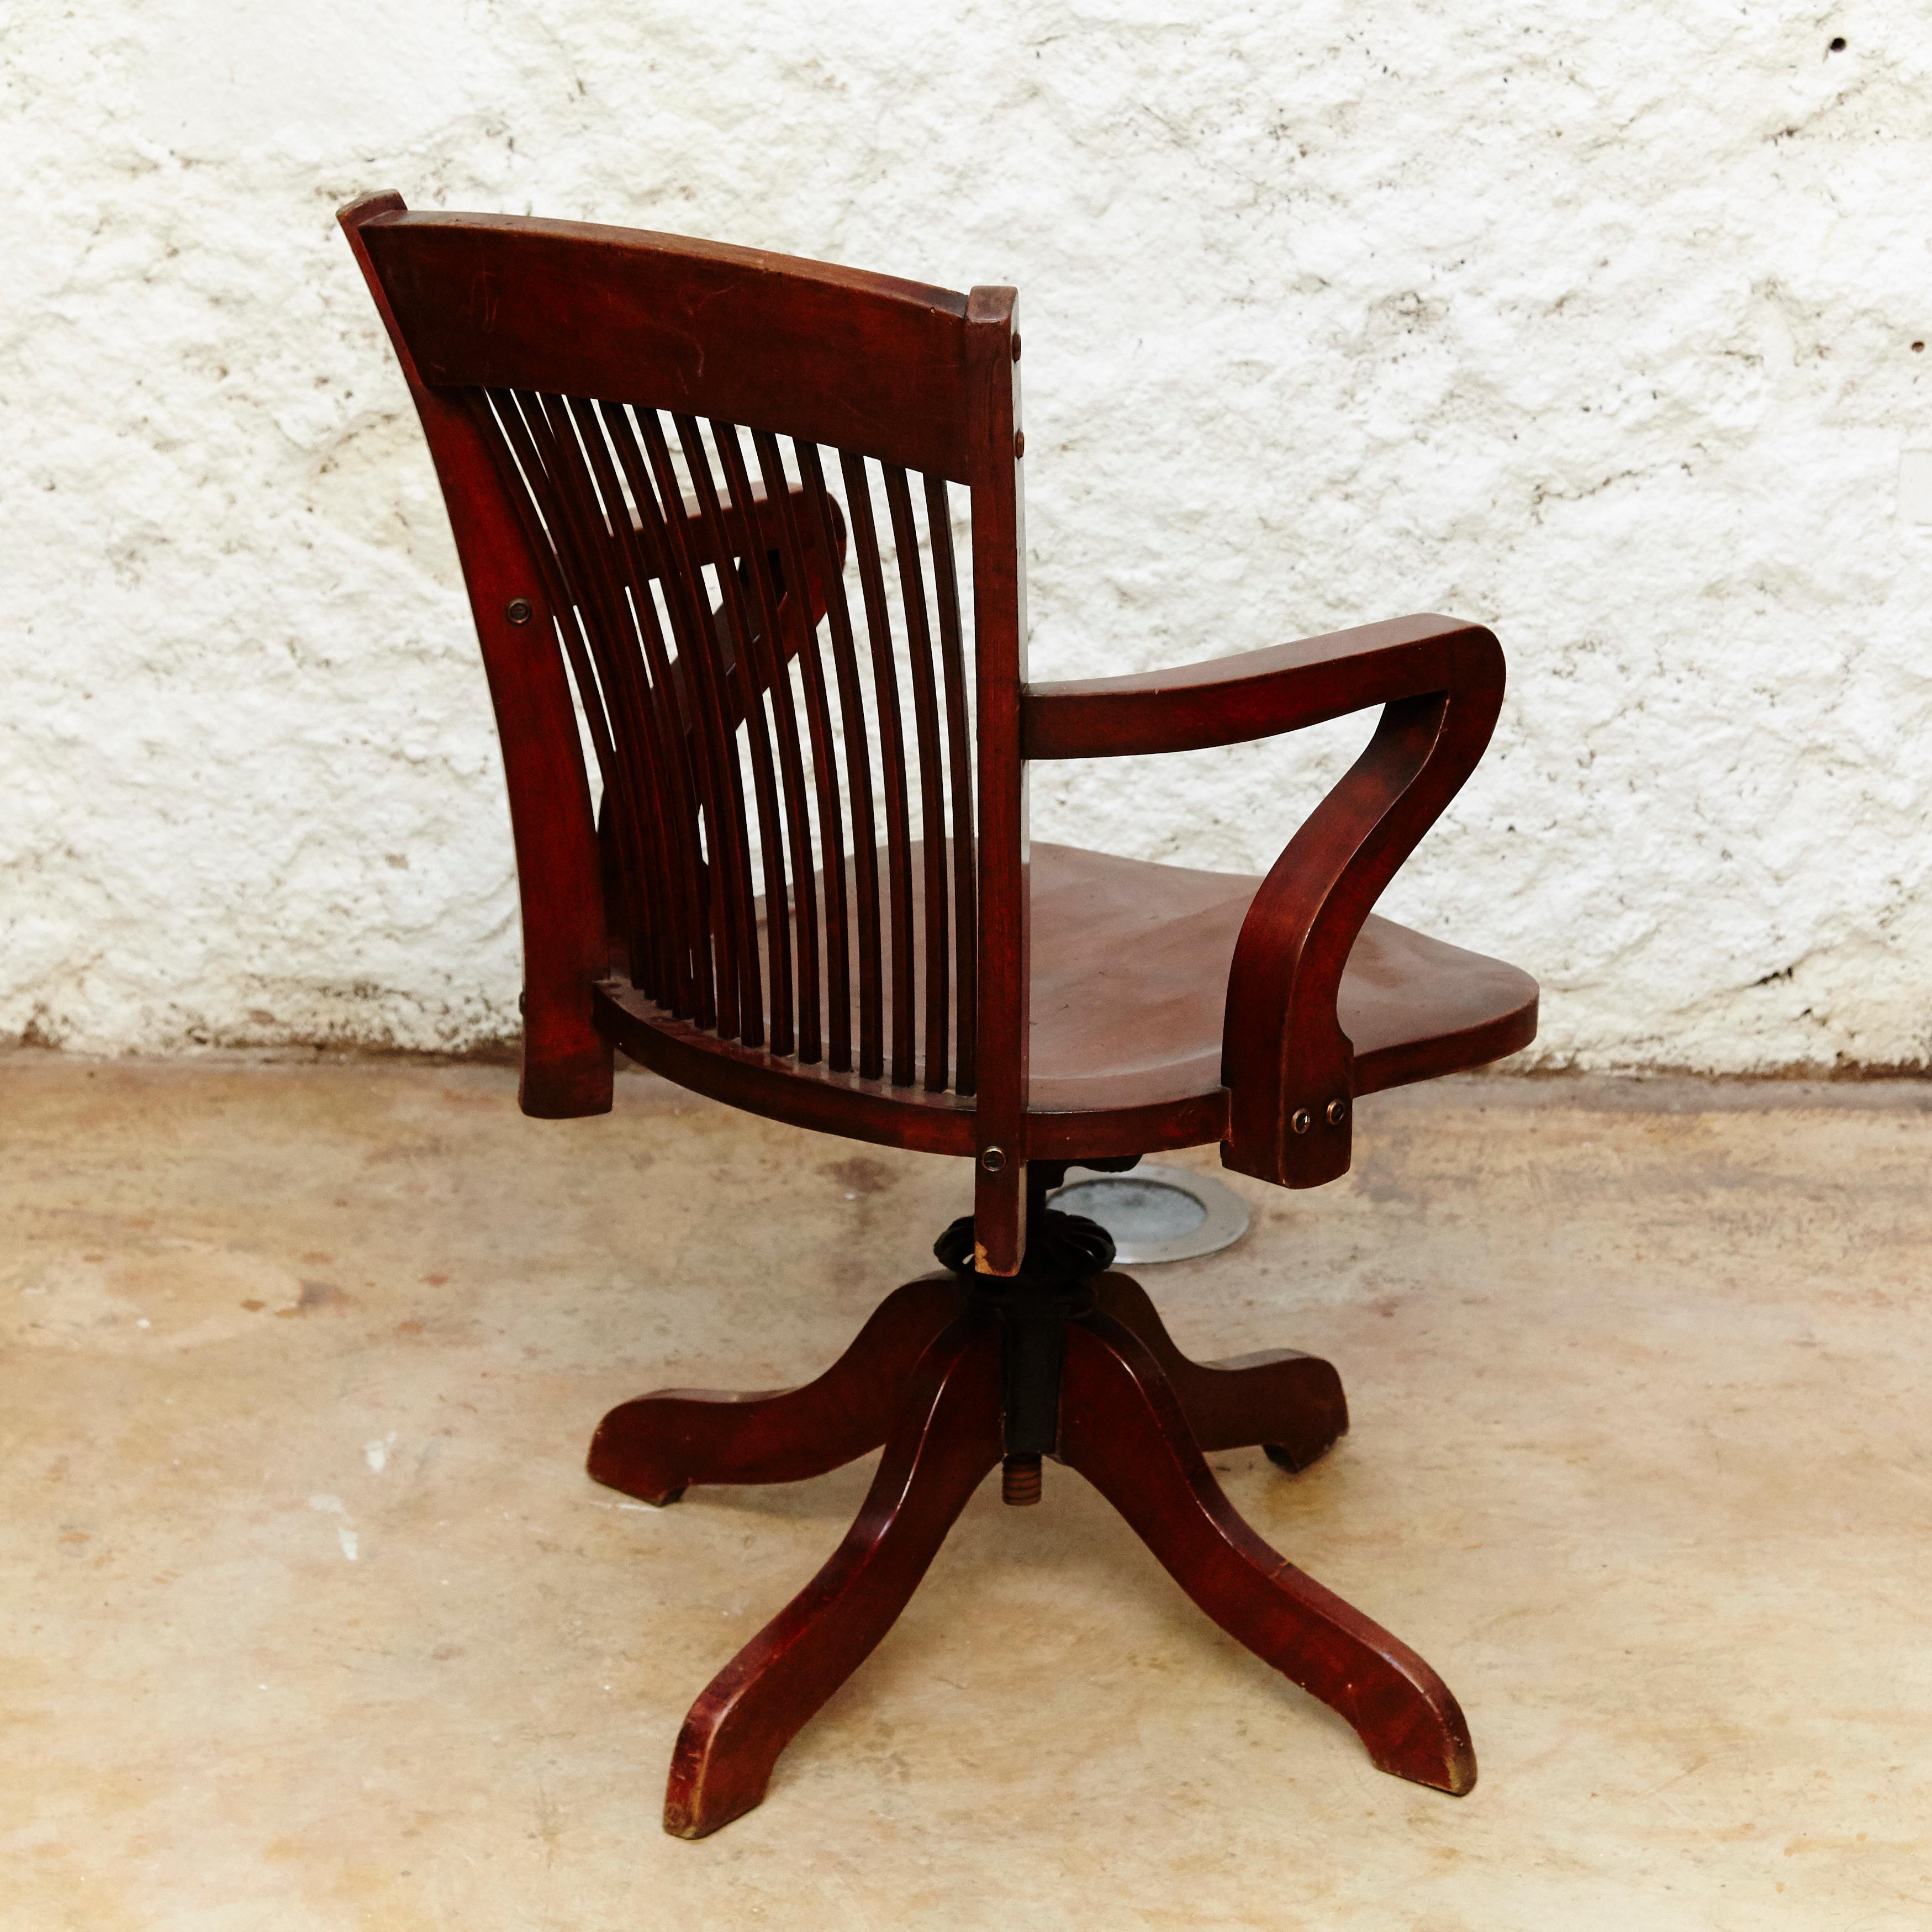 Spanish Modernist Wood Swivel Chair from Barcelona, circa 1940